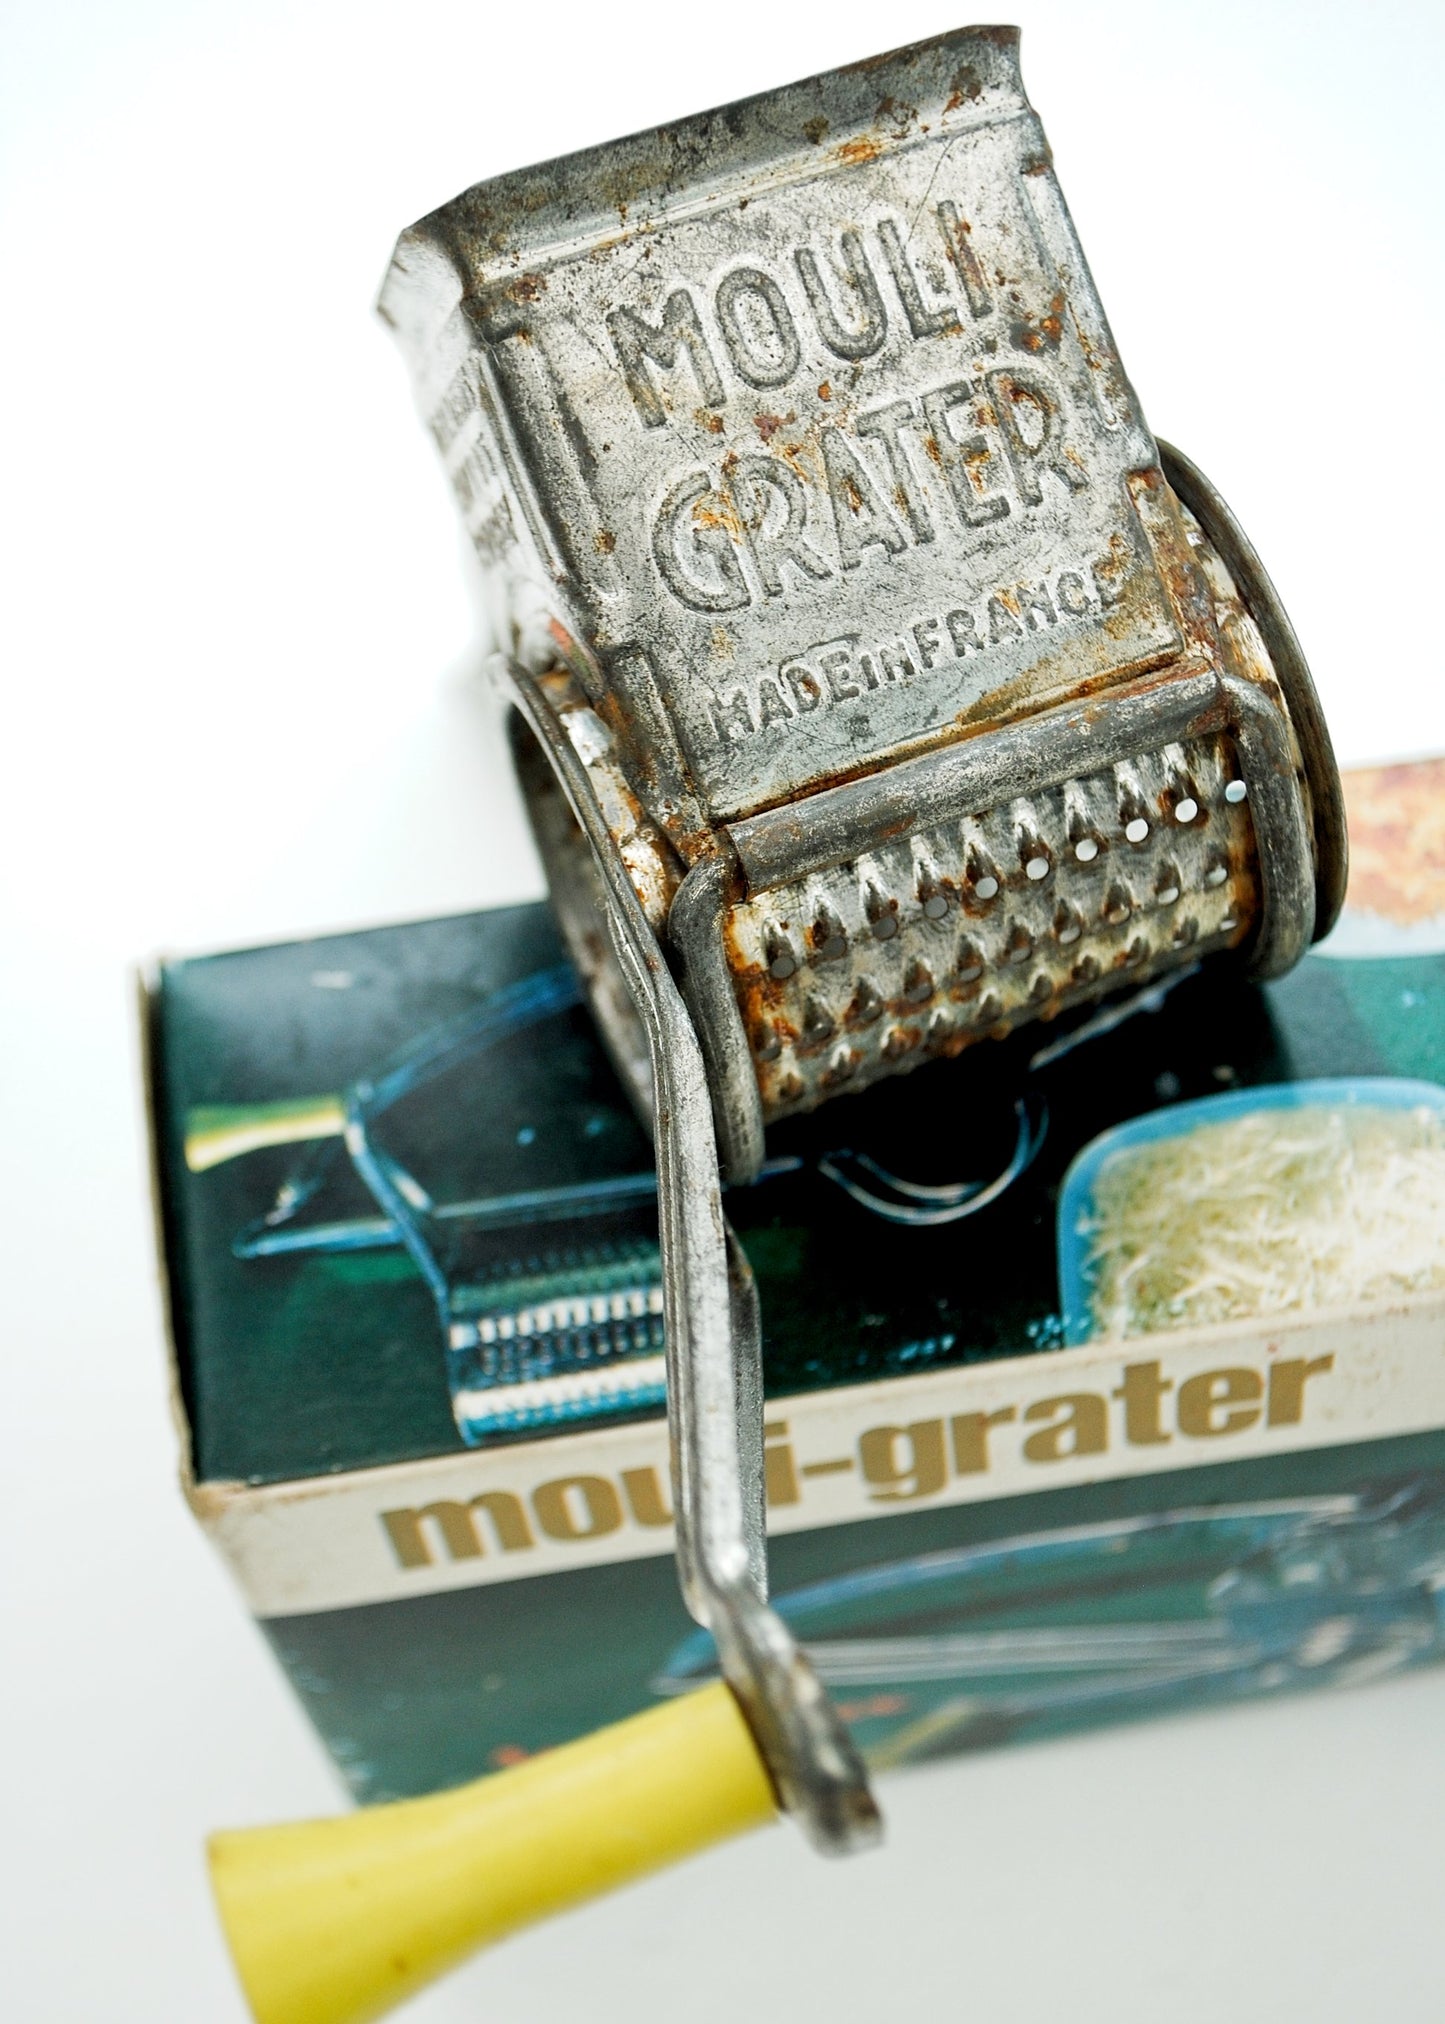 Vintage Original 60s Mouli Grater • Cheese grater Kitchen Gadget • Film Prop